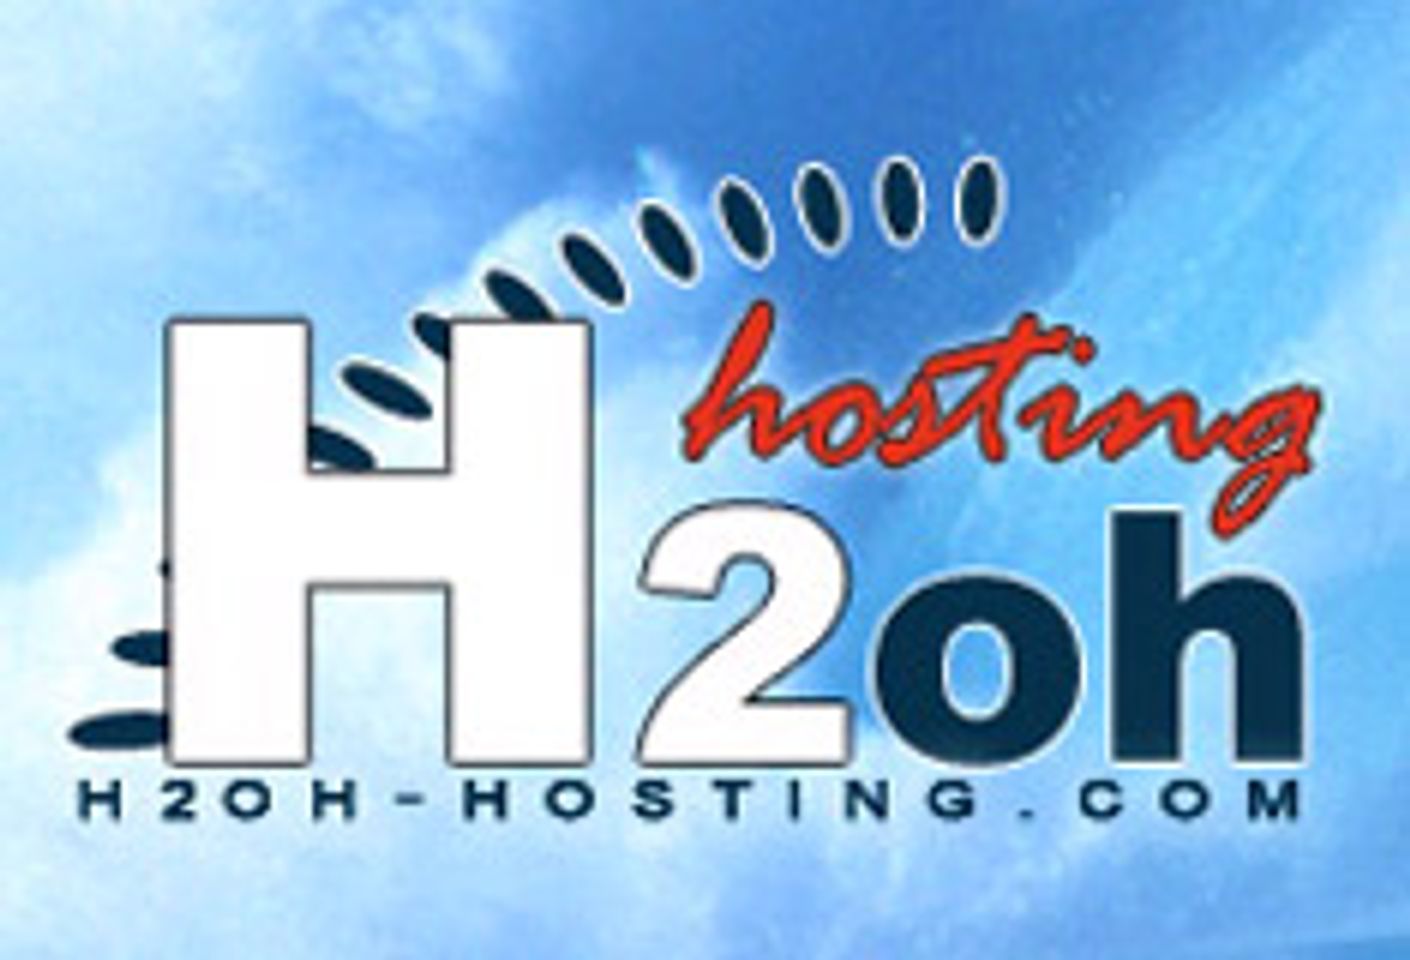 H2oh Hosting Offers Unmetered Bandwidth Dedicated Servers